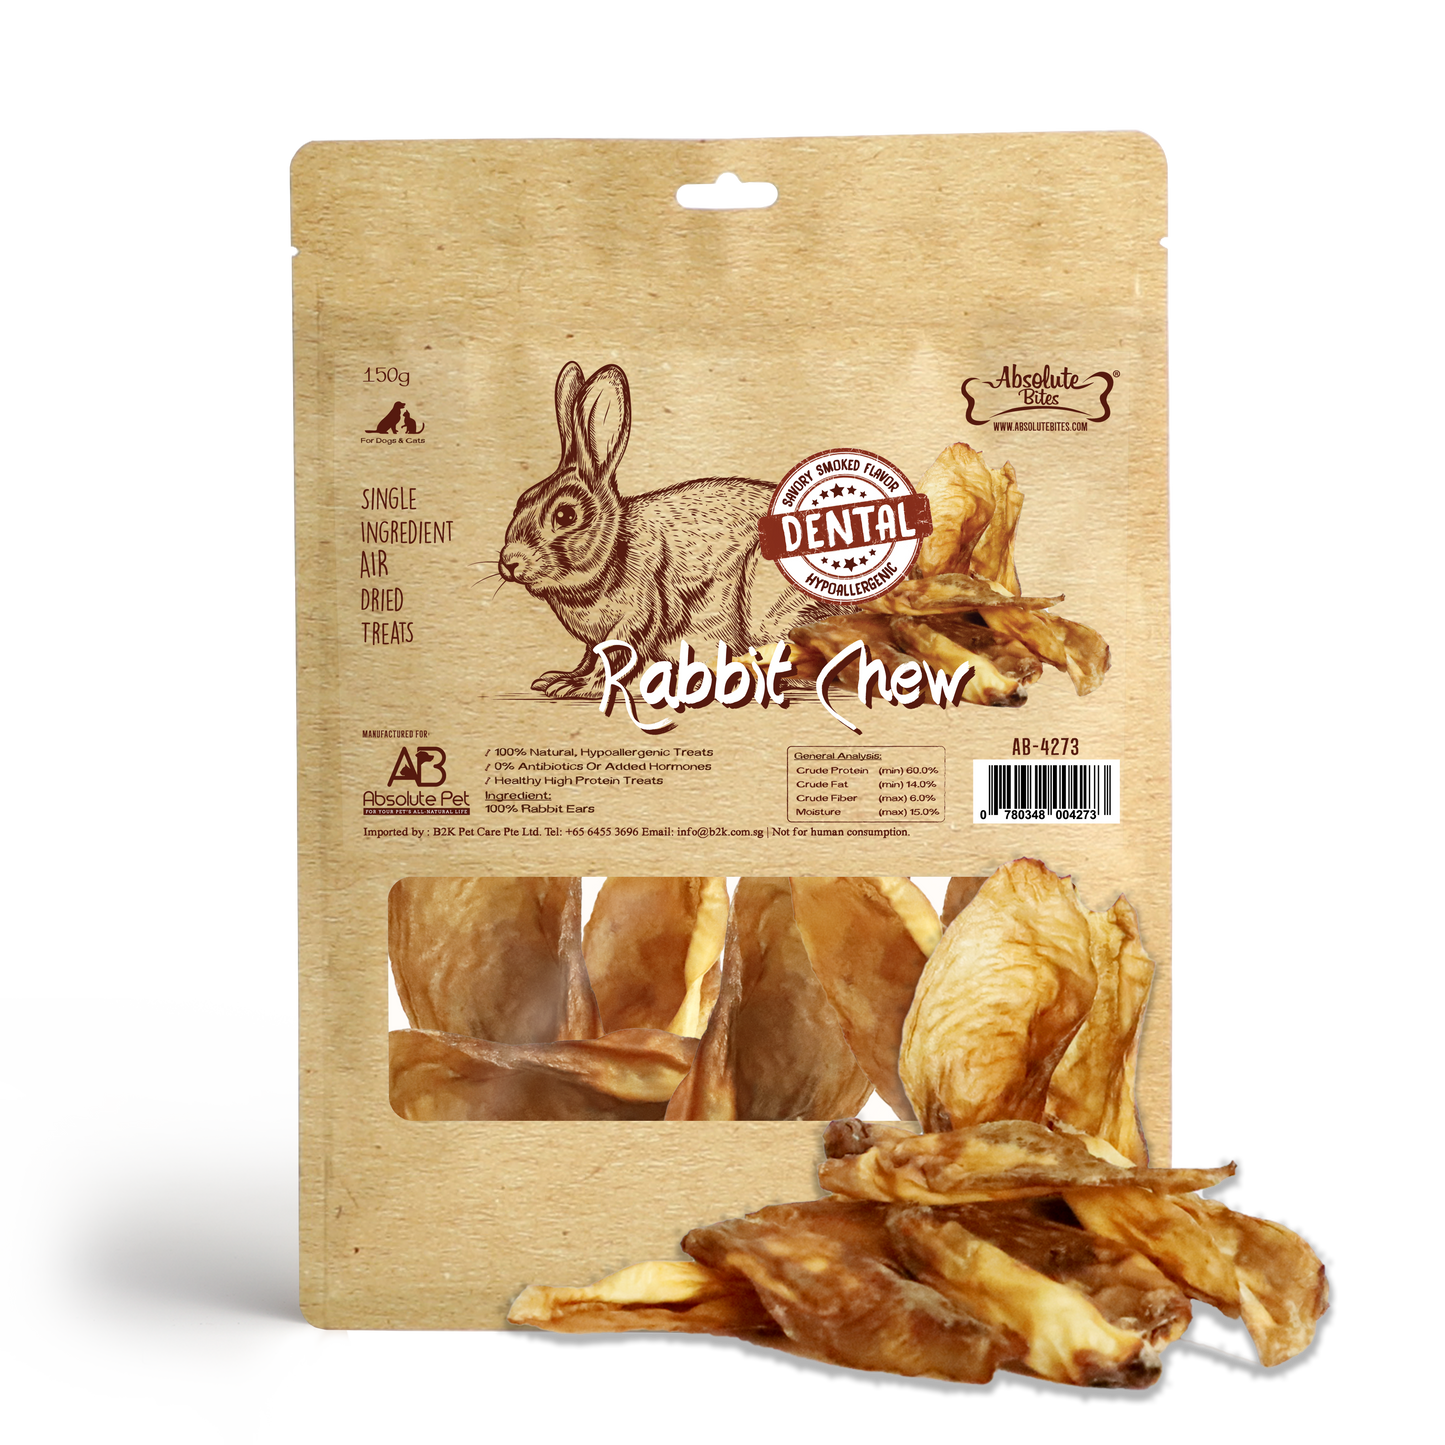 Absolute Bites Air Dried Rabbit Chew Dog Treats (Large Bag) 150g